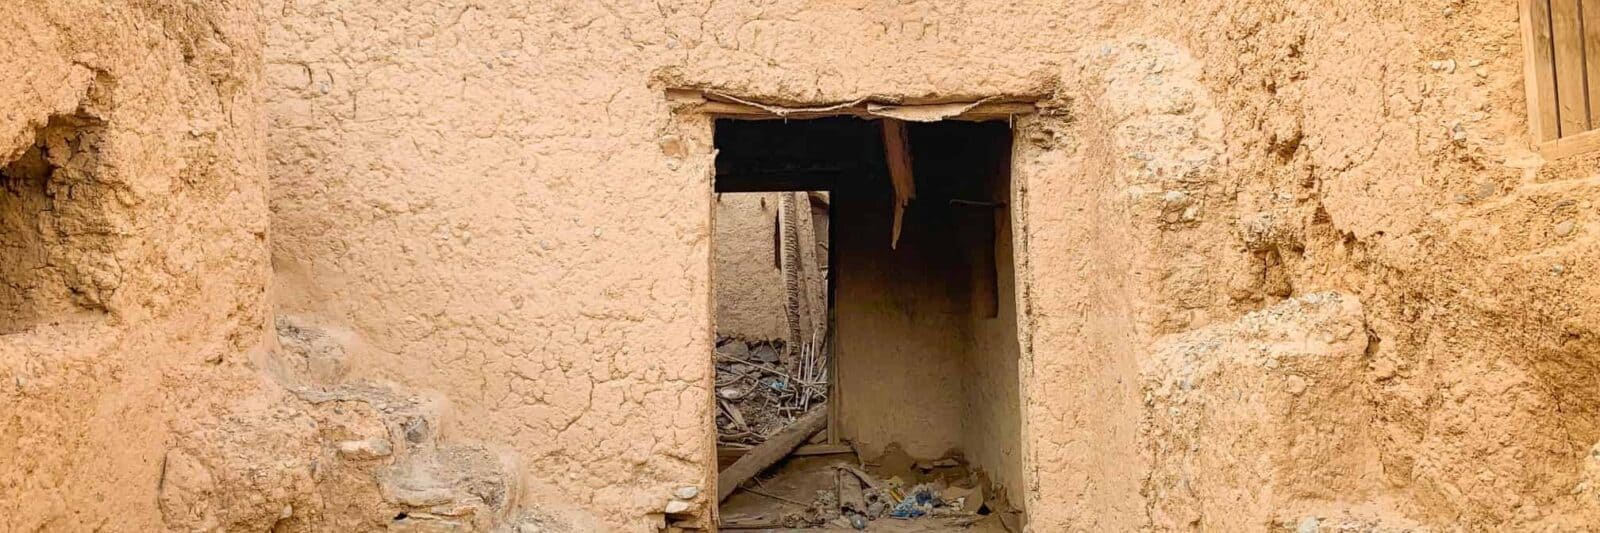 An abandoned doorway in Al Hamra Oman